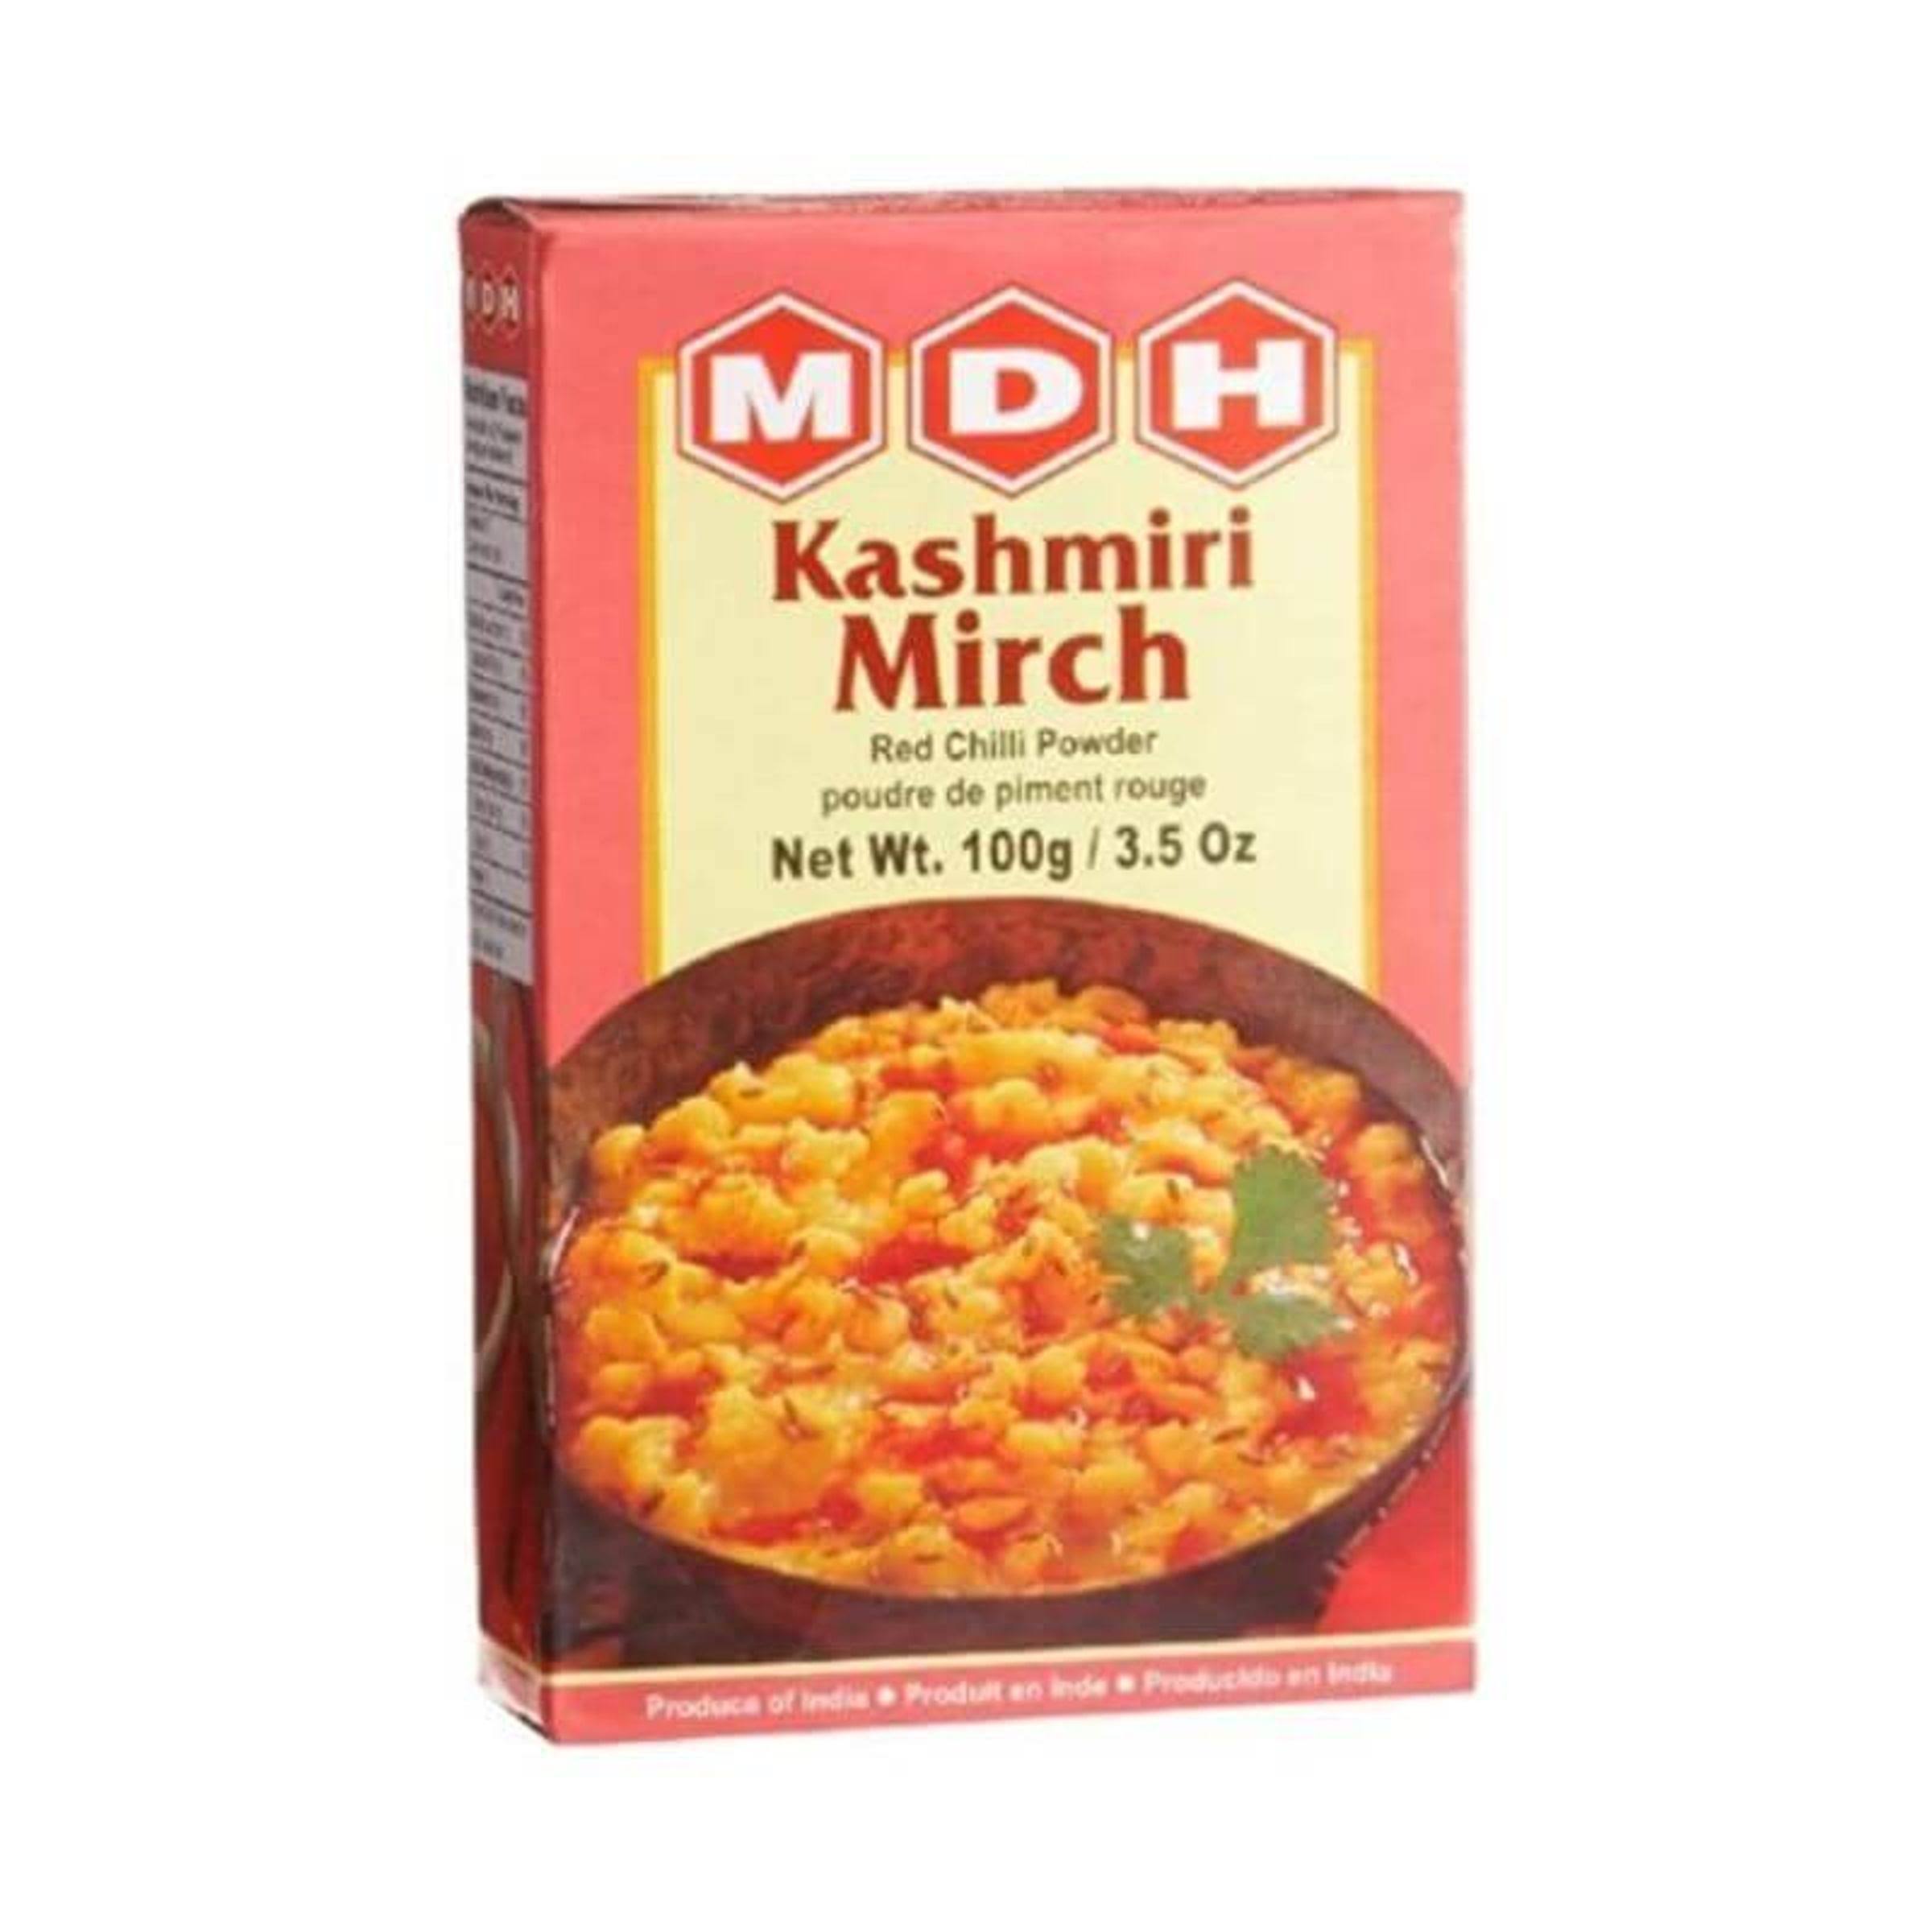 MDH Kashmiri Mirch Red Chilli Powder - 100 gm